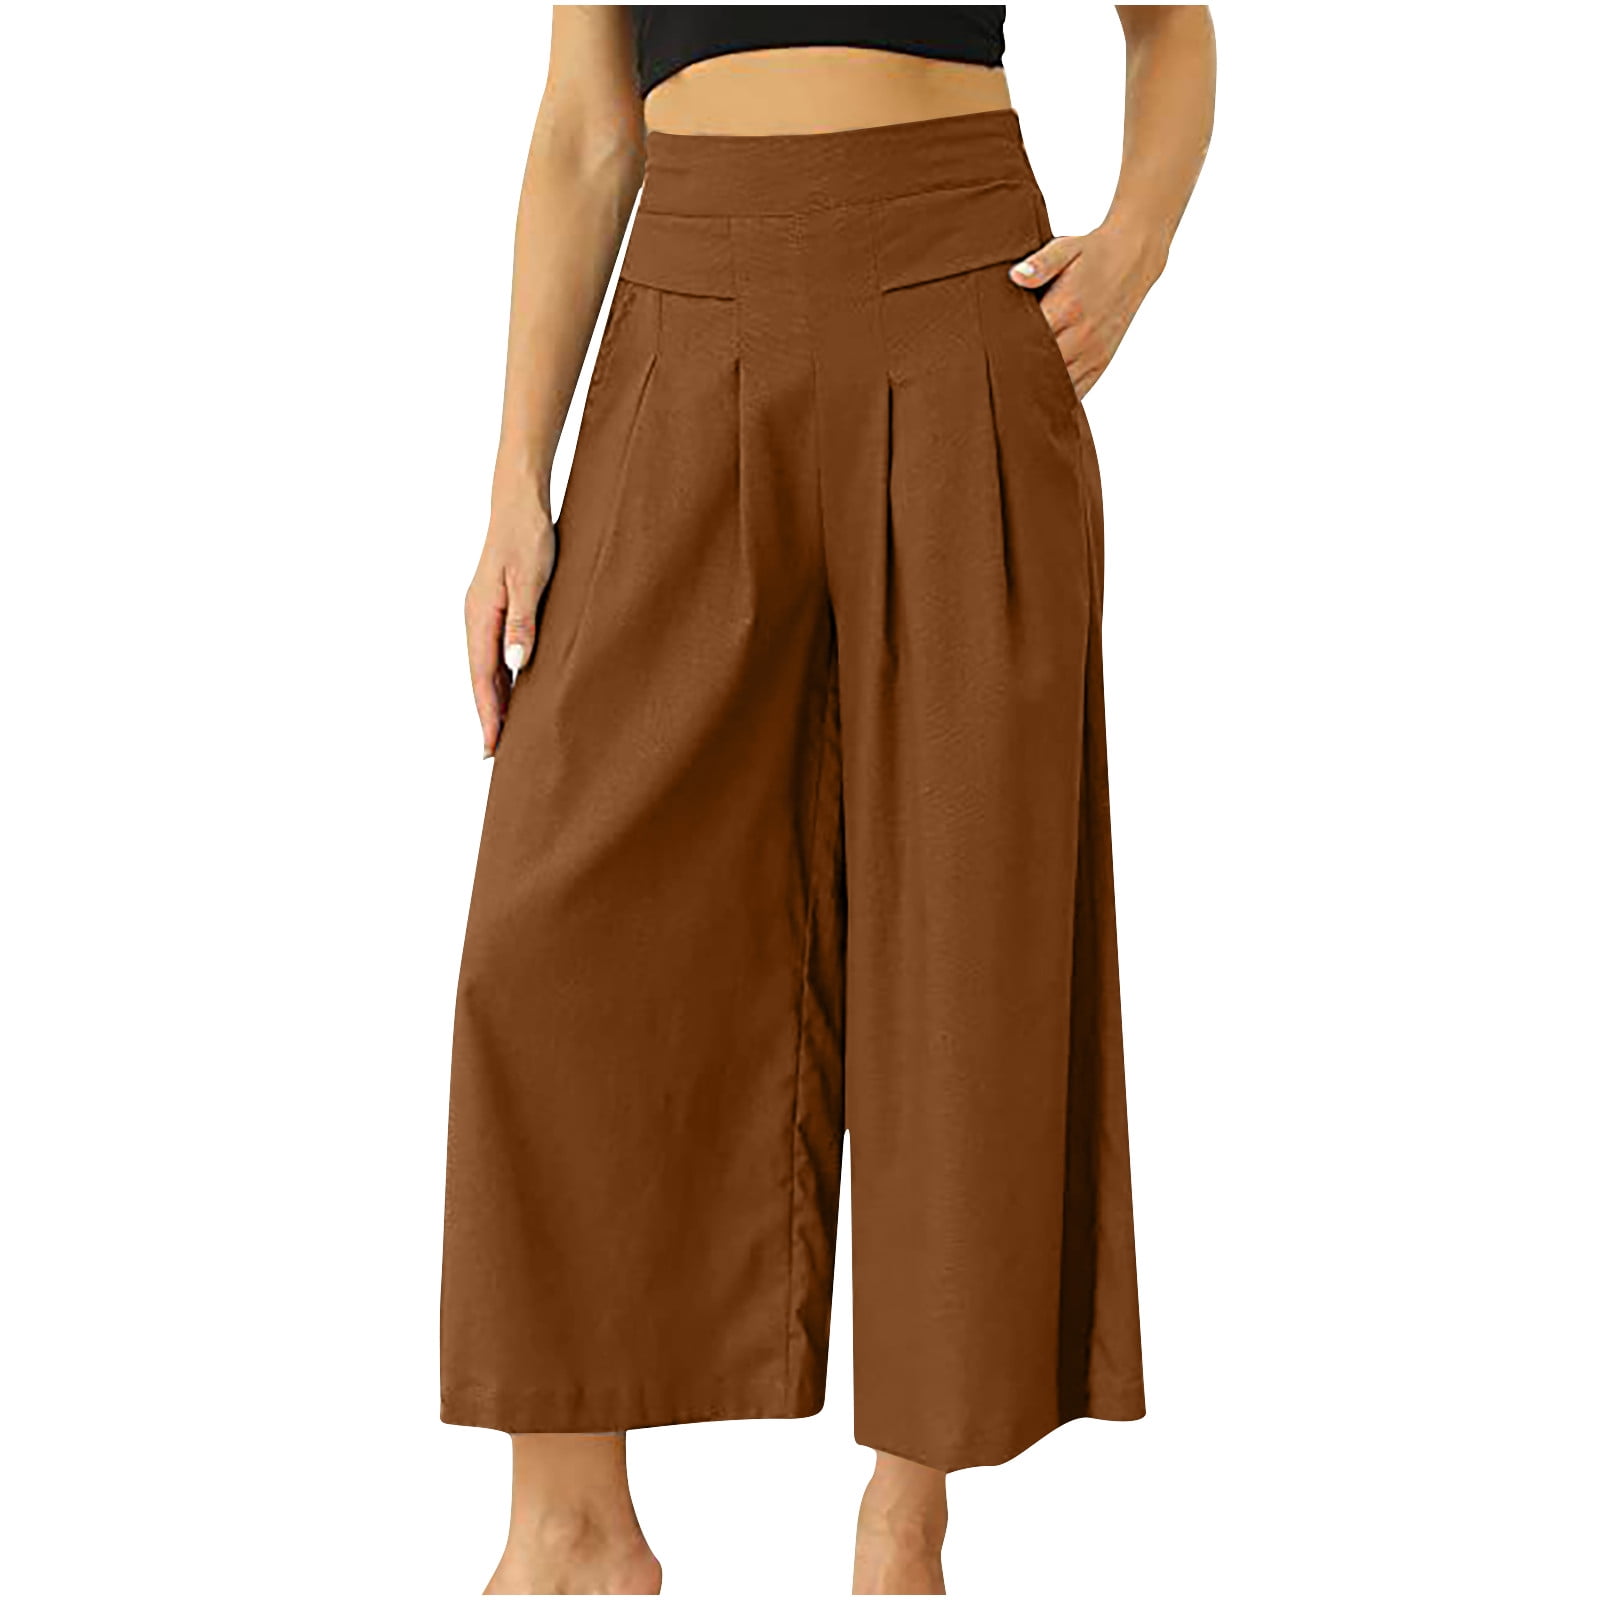 CZHJS Women's Solid Color Crop Pants Clearance Baggy Slacks Capris Light  Weight Fit Elastic Waist Wide Leg Beach Trousers with Pockets Comfy Fashion